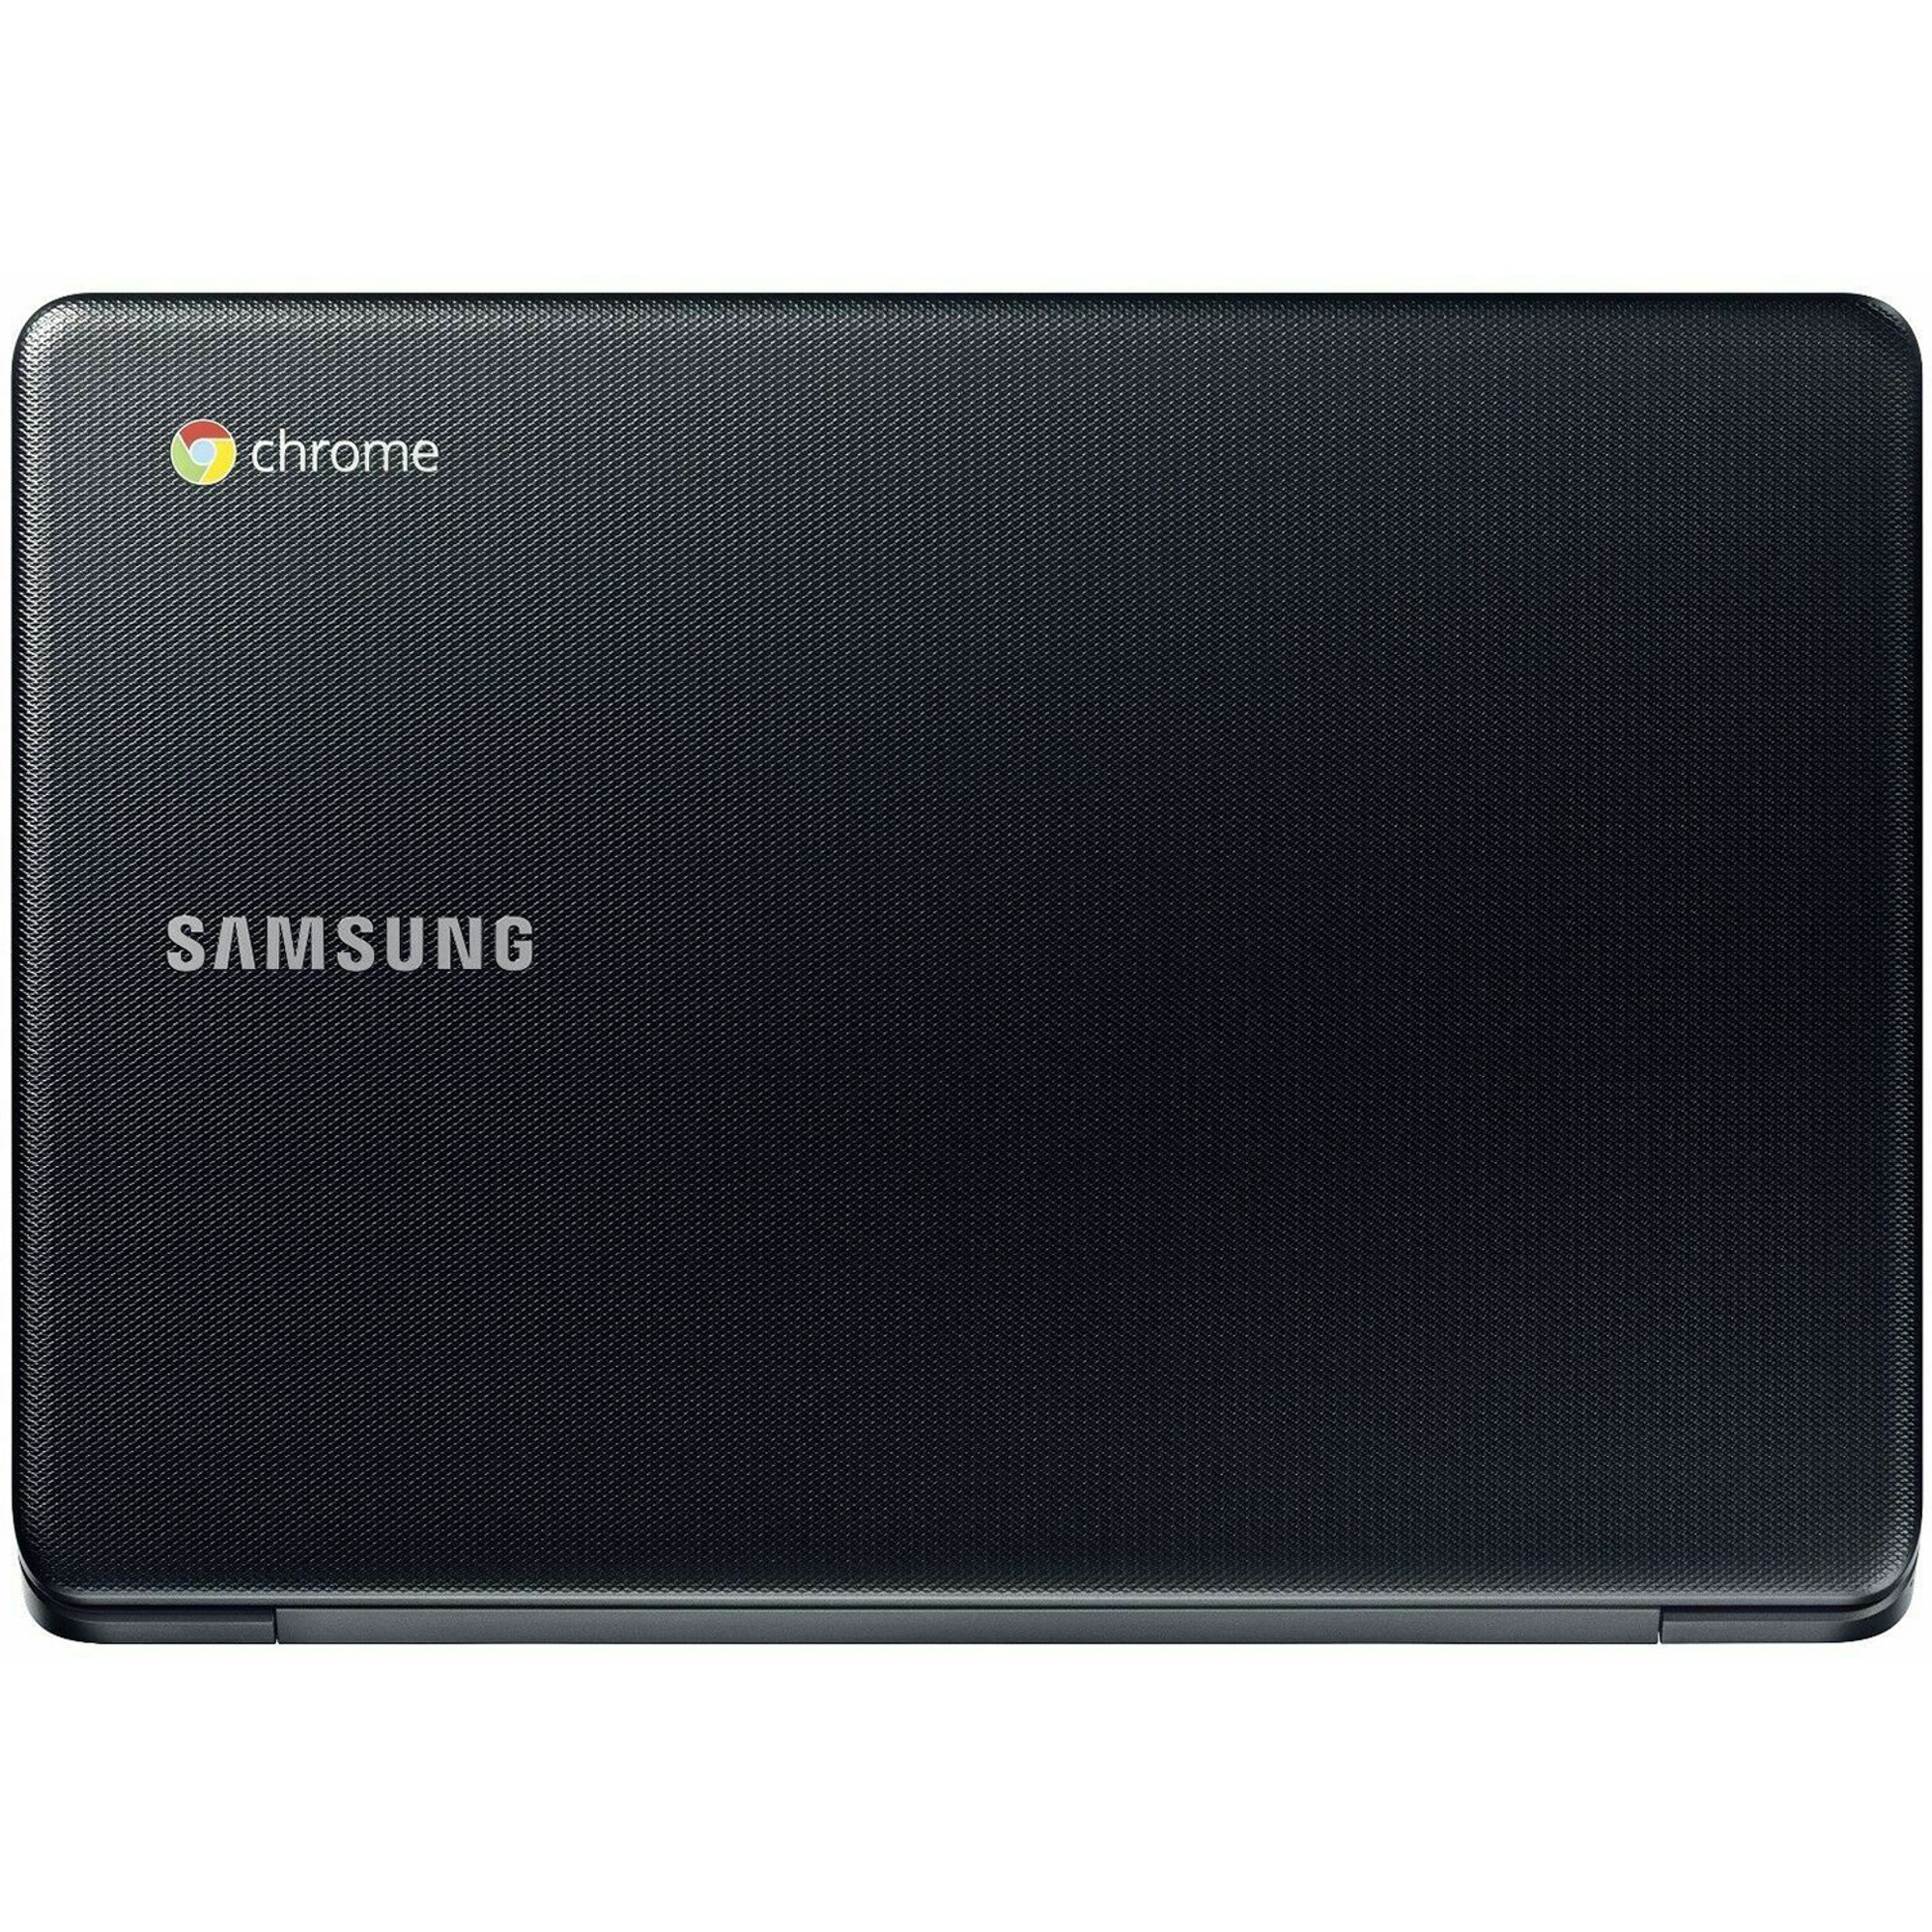 HP laptop Chromebook 11 G5 N3060 1.60GHz 4GB 16GB SSD 11.6 WEBCAM